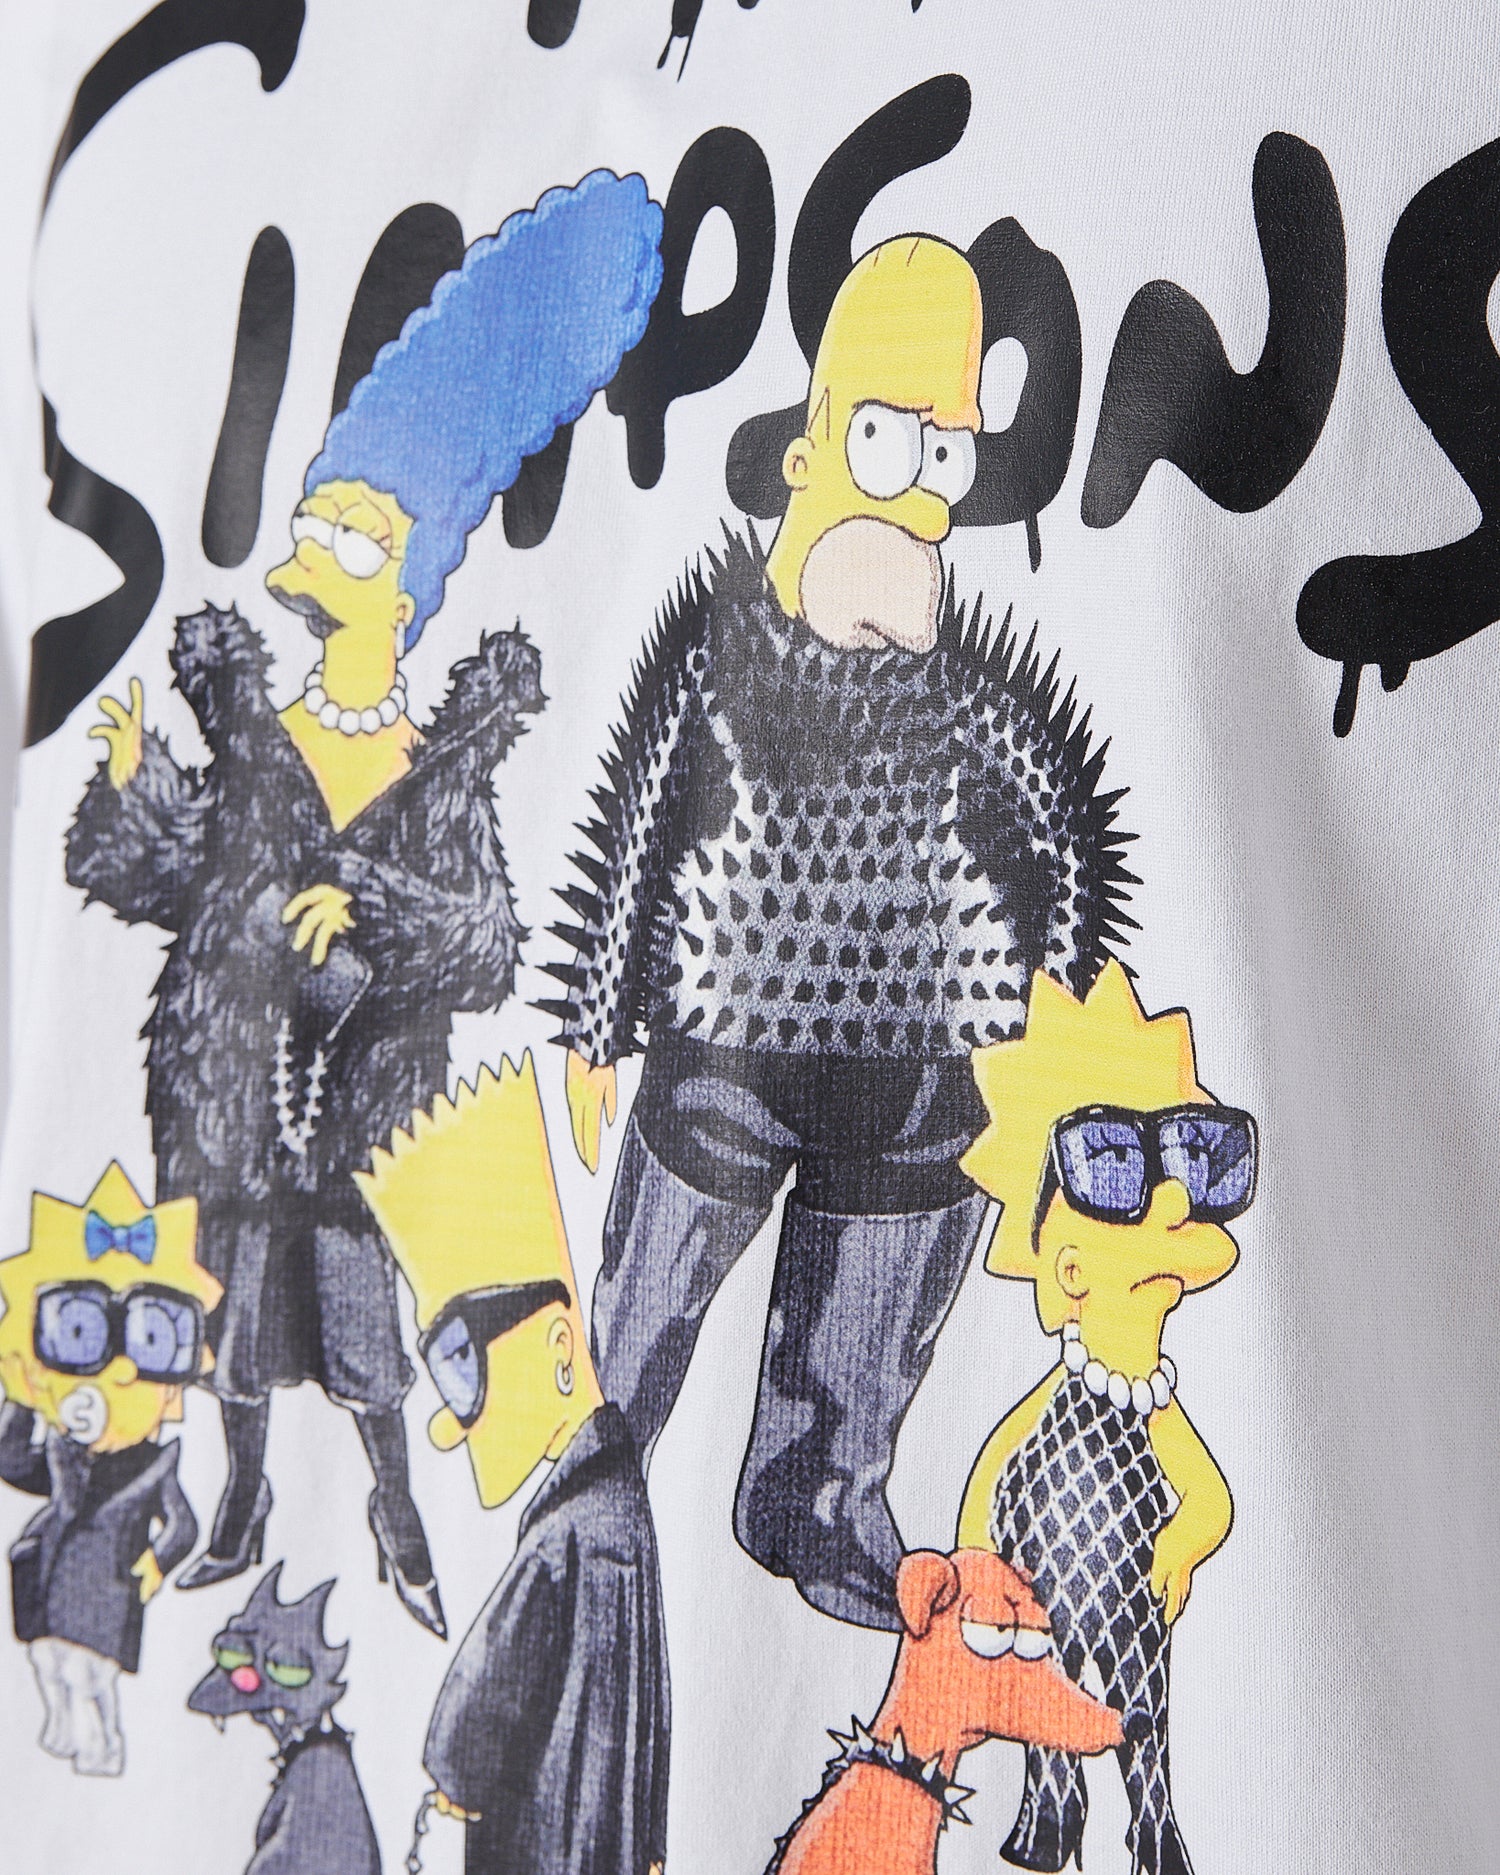 BAL The Simpsons Printed Men White T-Shirt 17.90